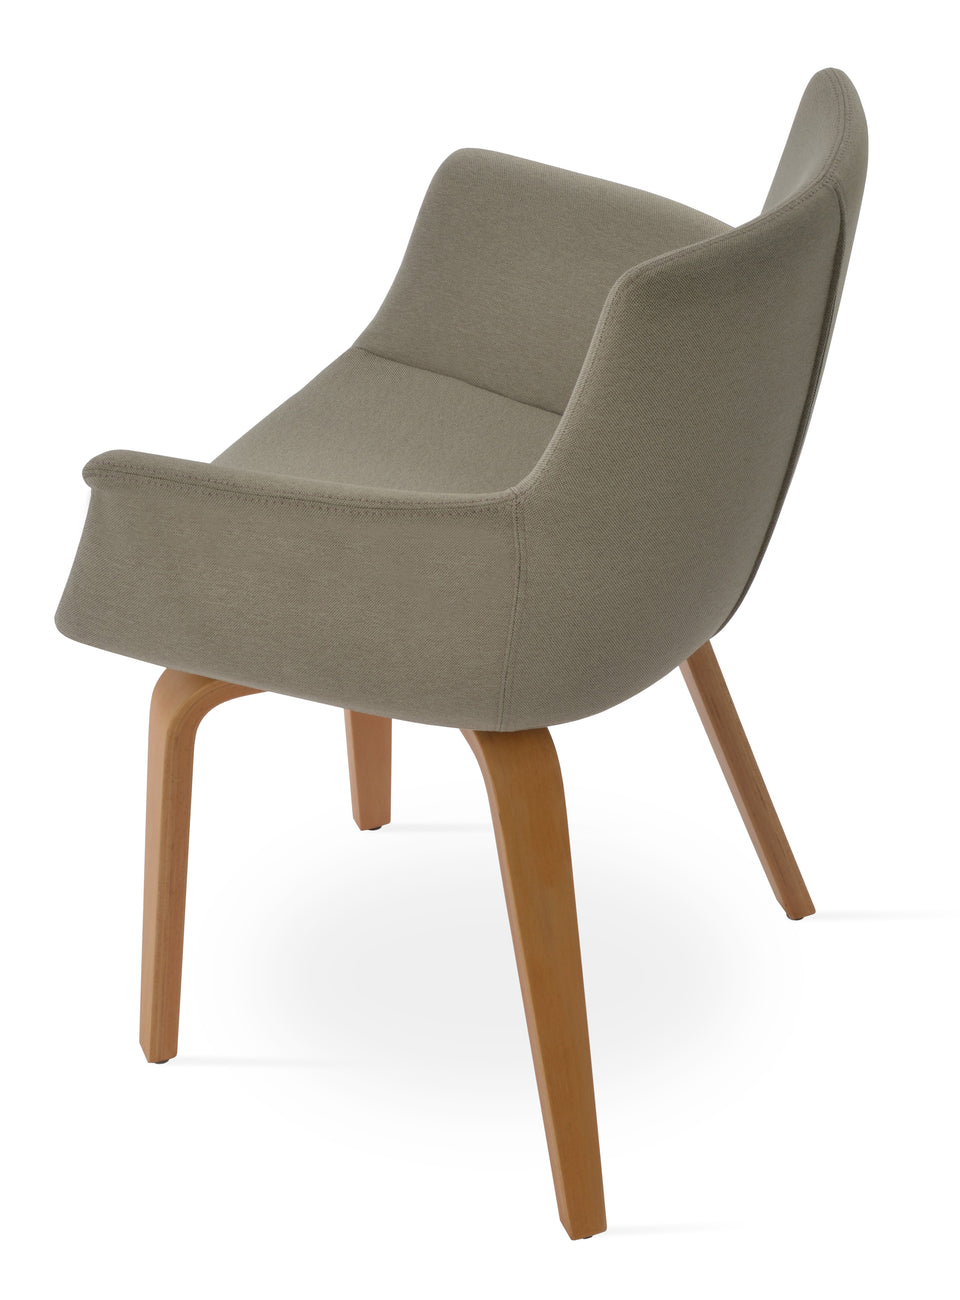 Bottega Arm Plywood Chair.